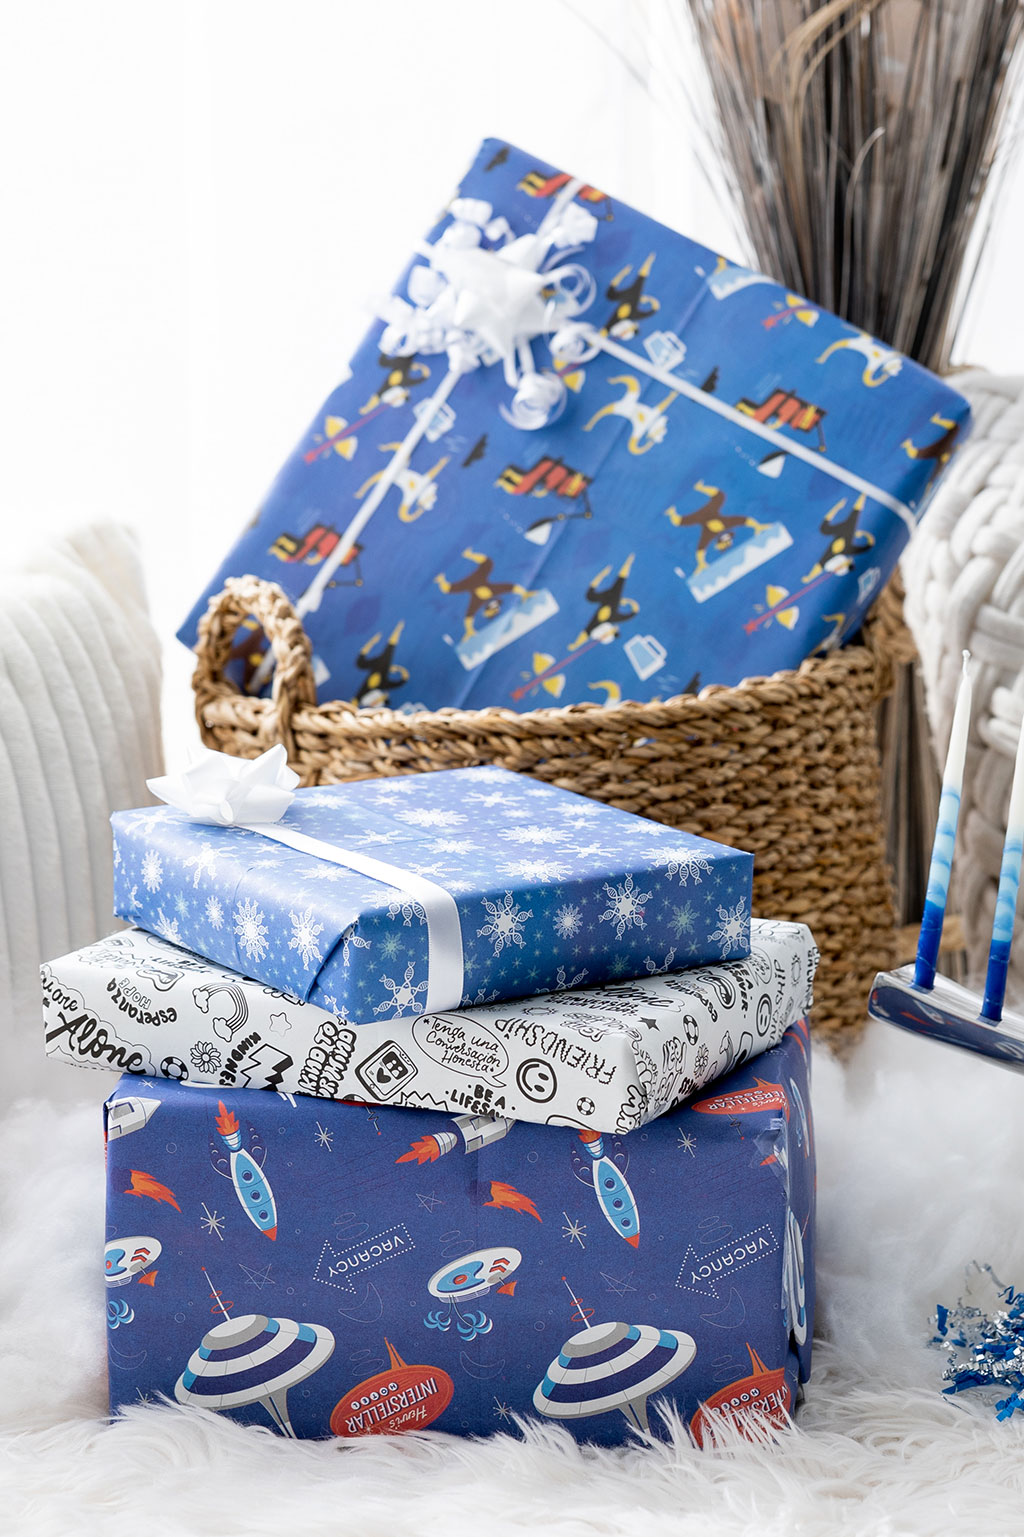 White Gift Wrapping - Christmas Magazine